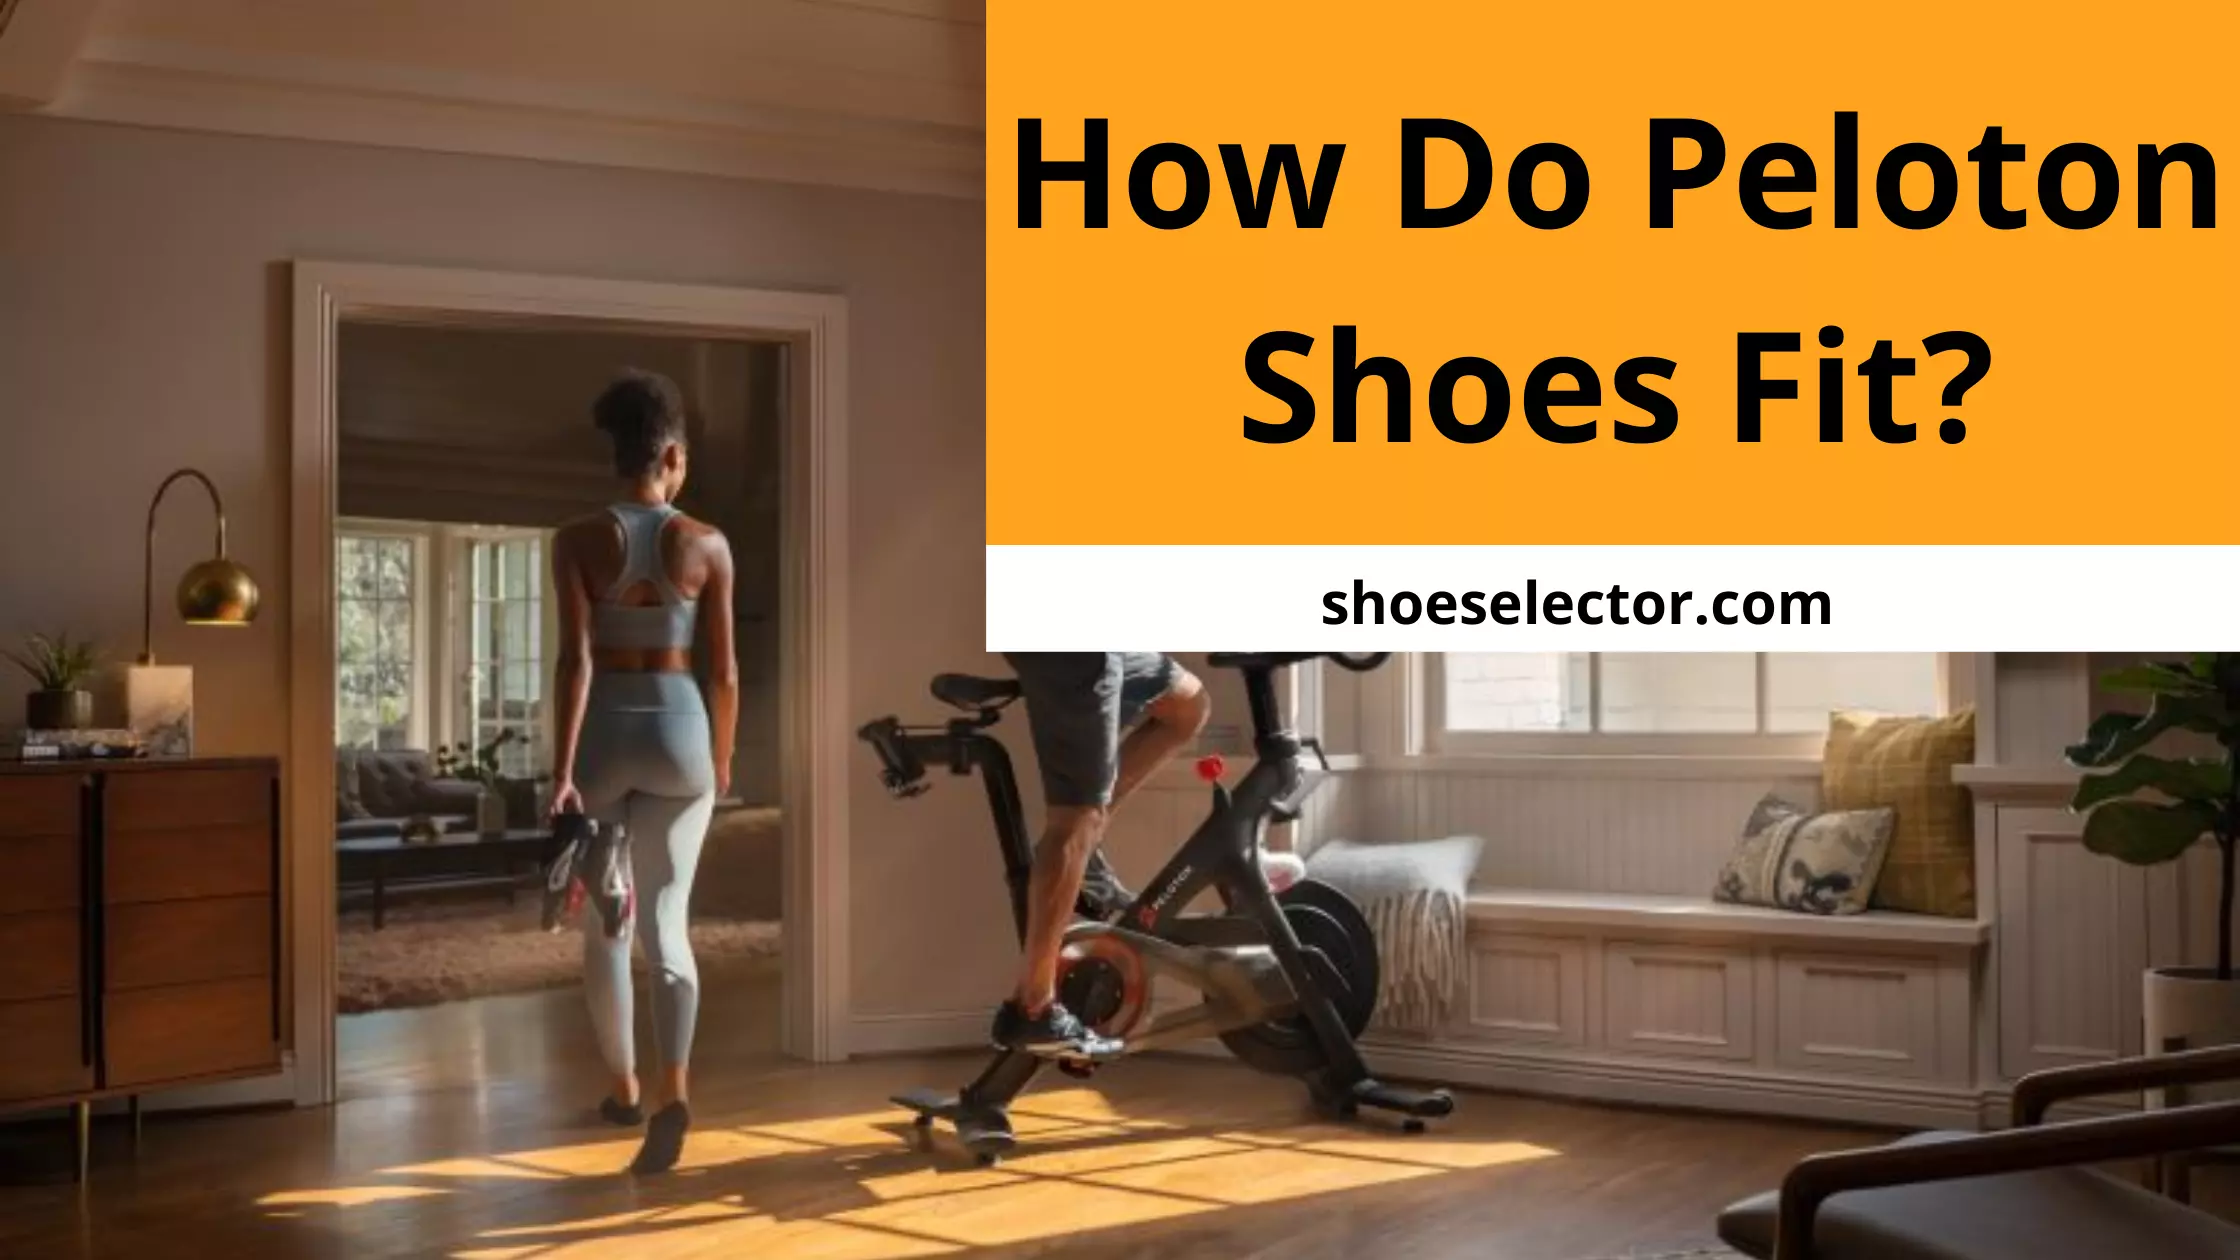 How Do Peloton Shoes Fit? - Quick Guide